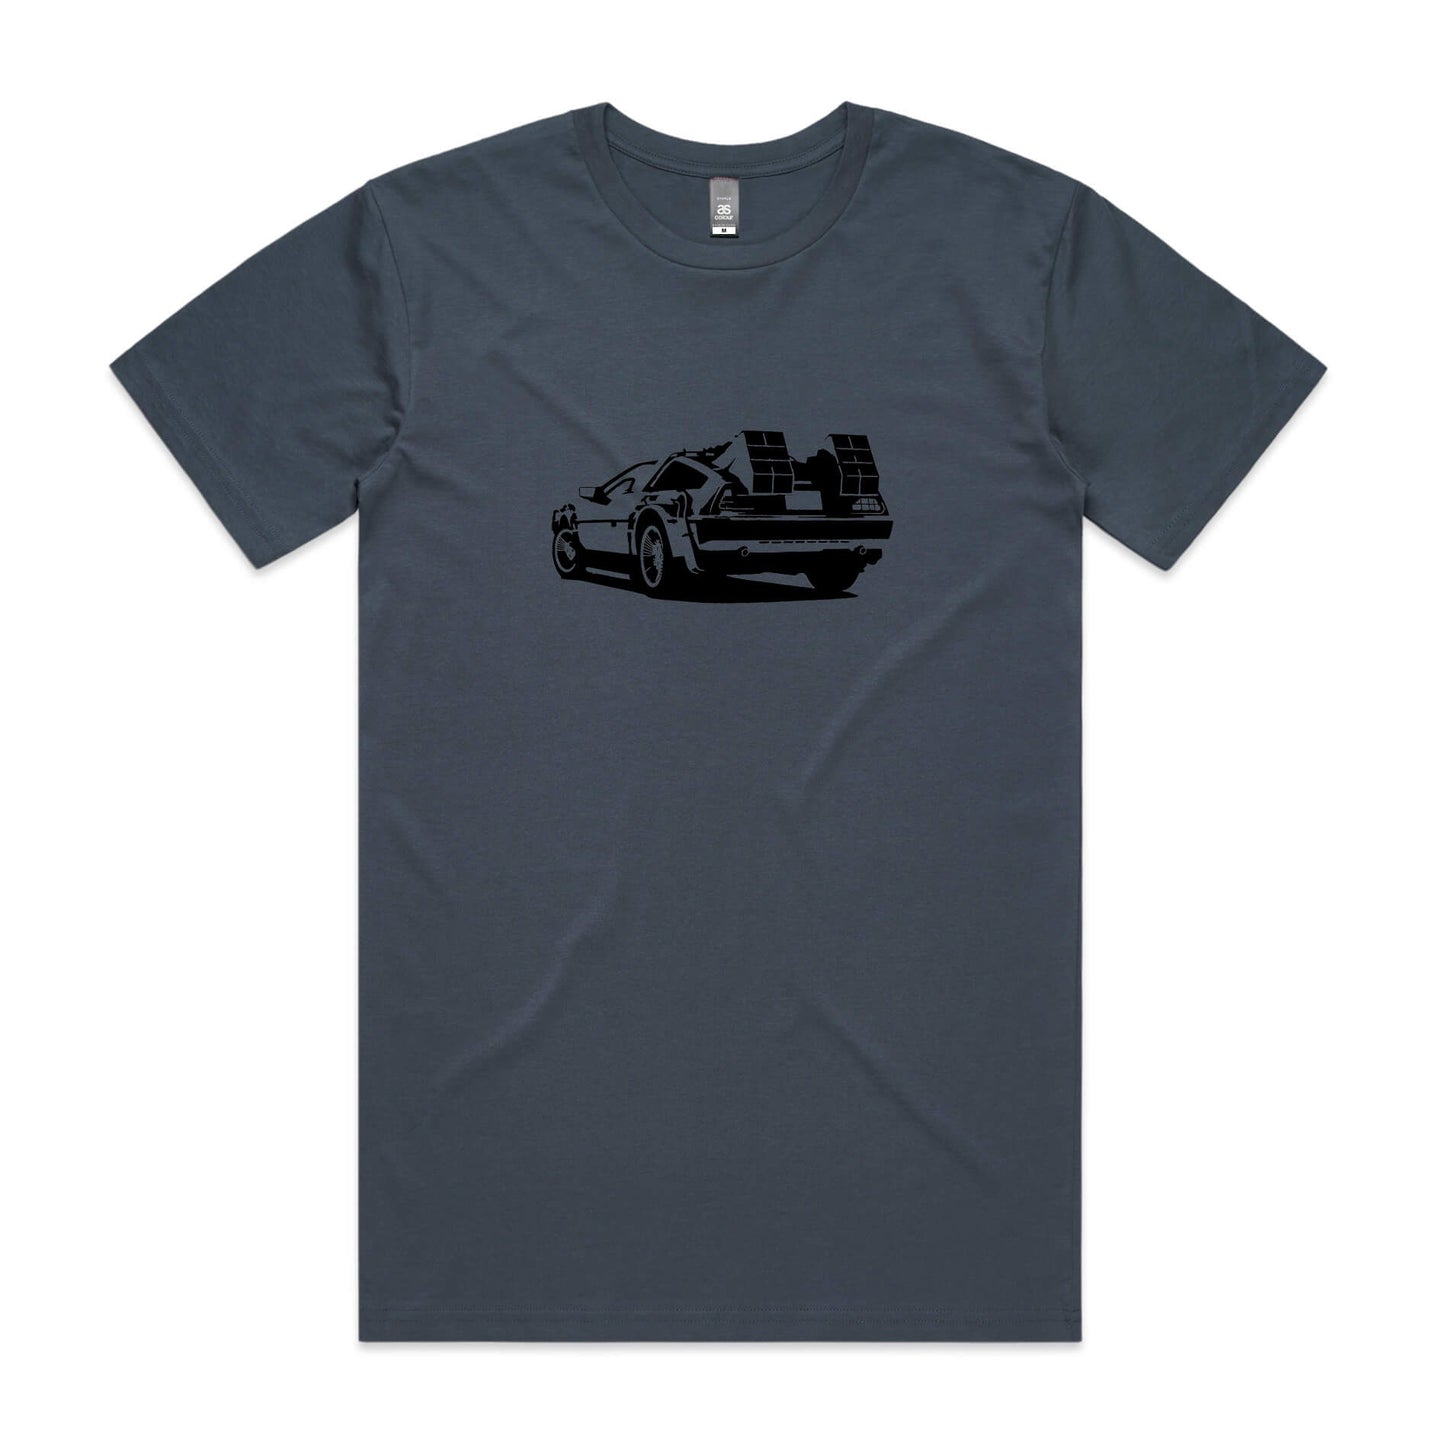 DeLorean Outatime T-Shirt